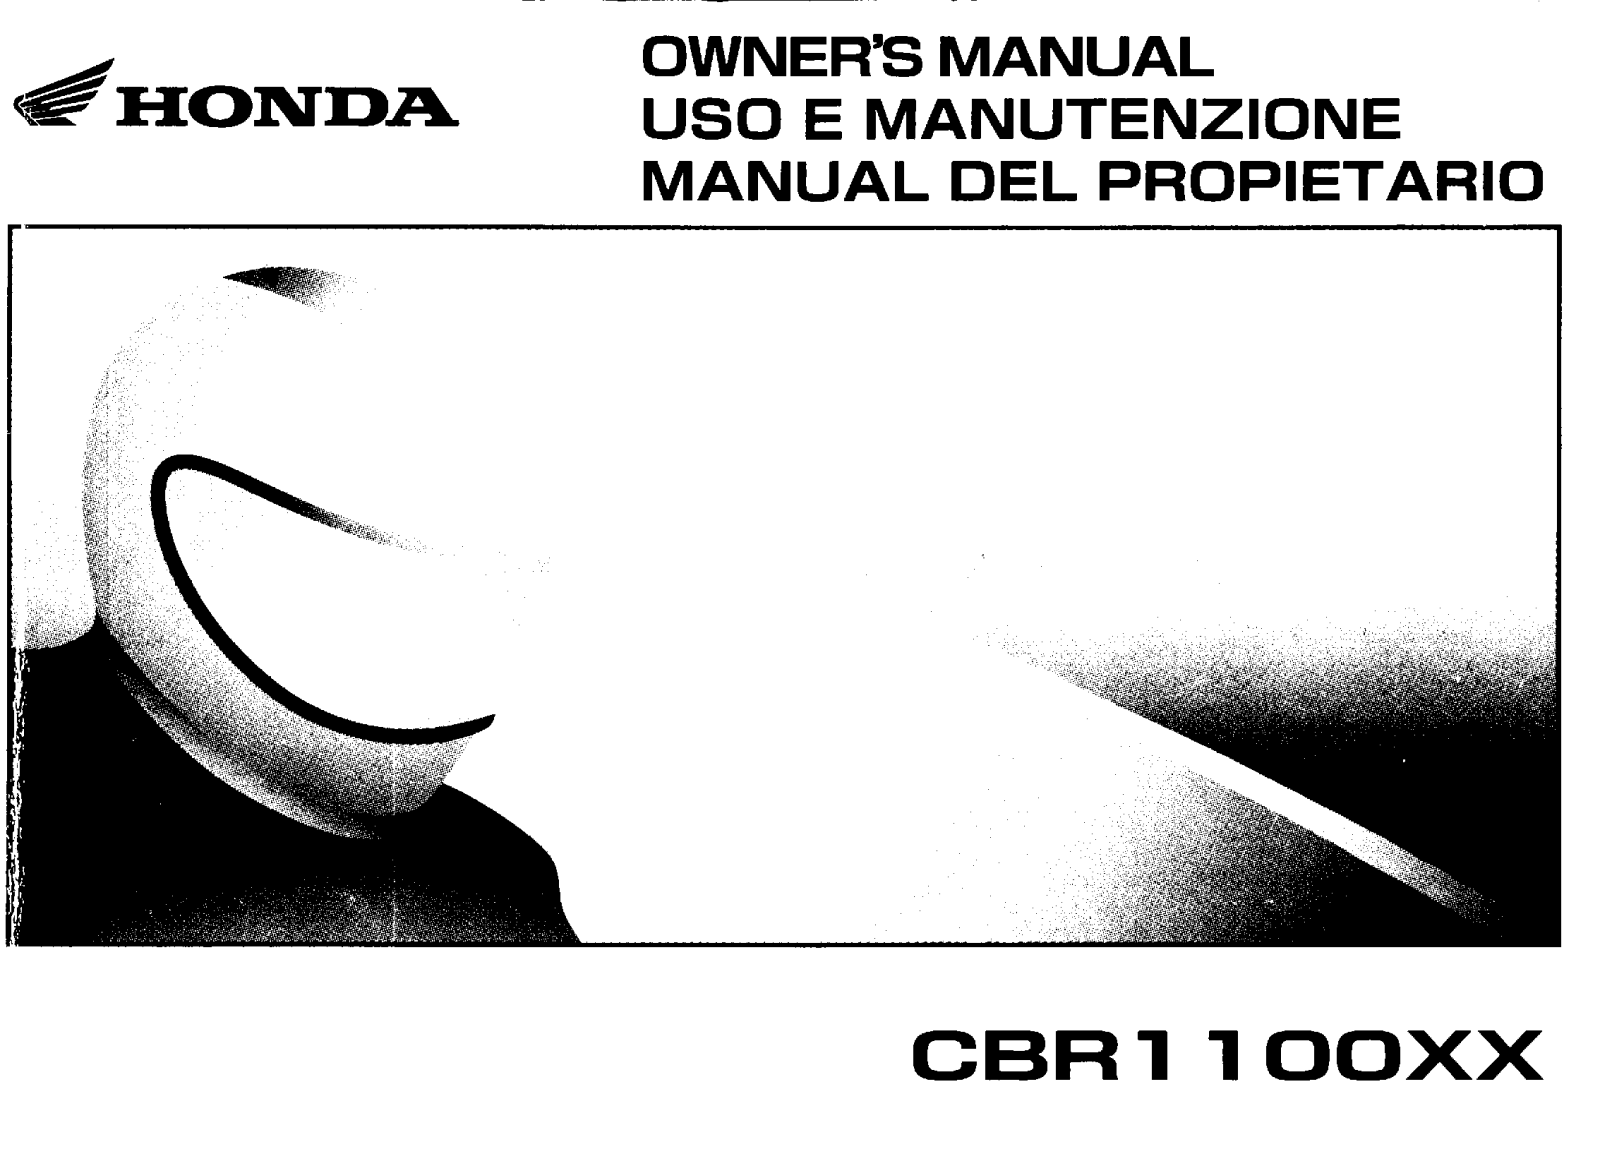 Honda CBR1100XX. 2007 Owner's Manual